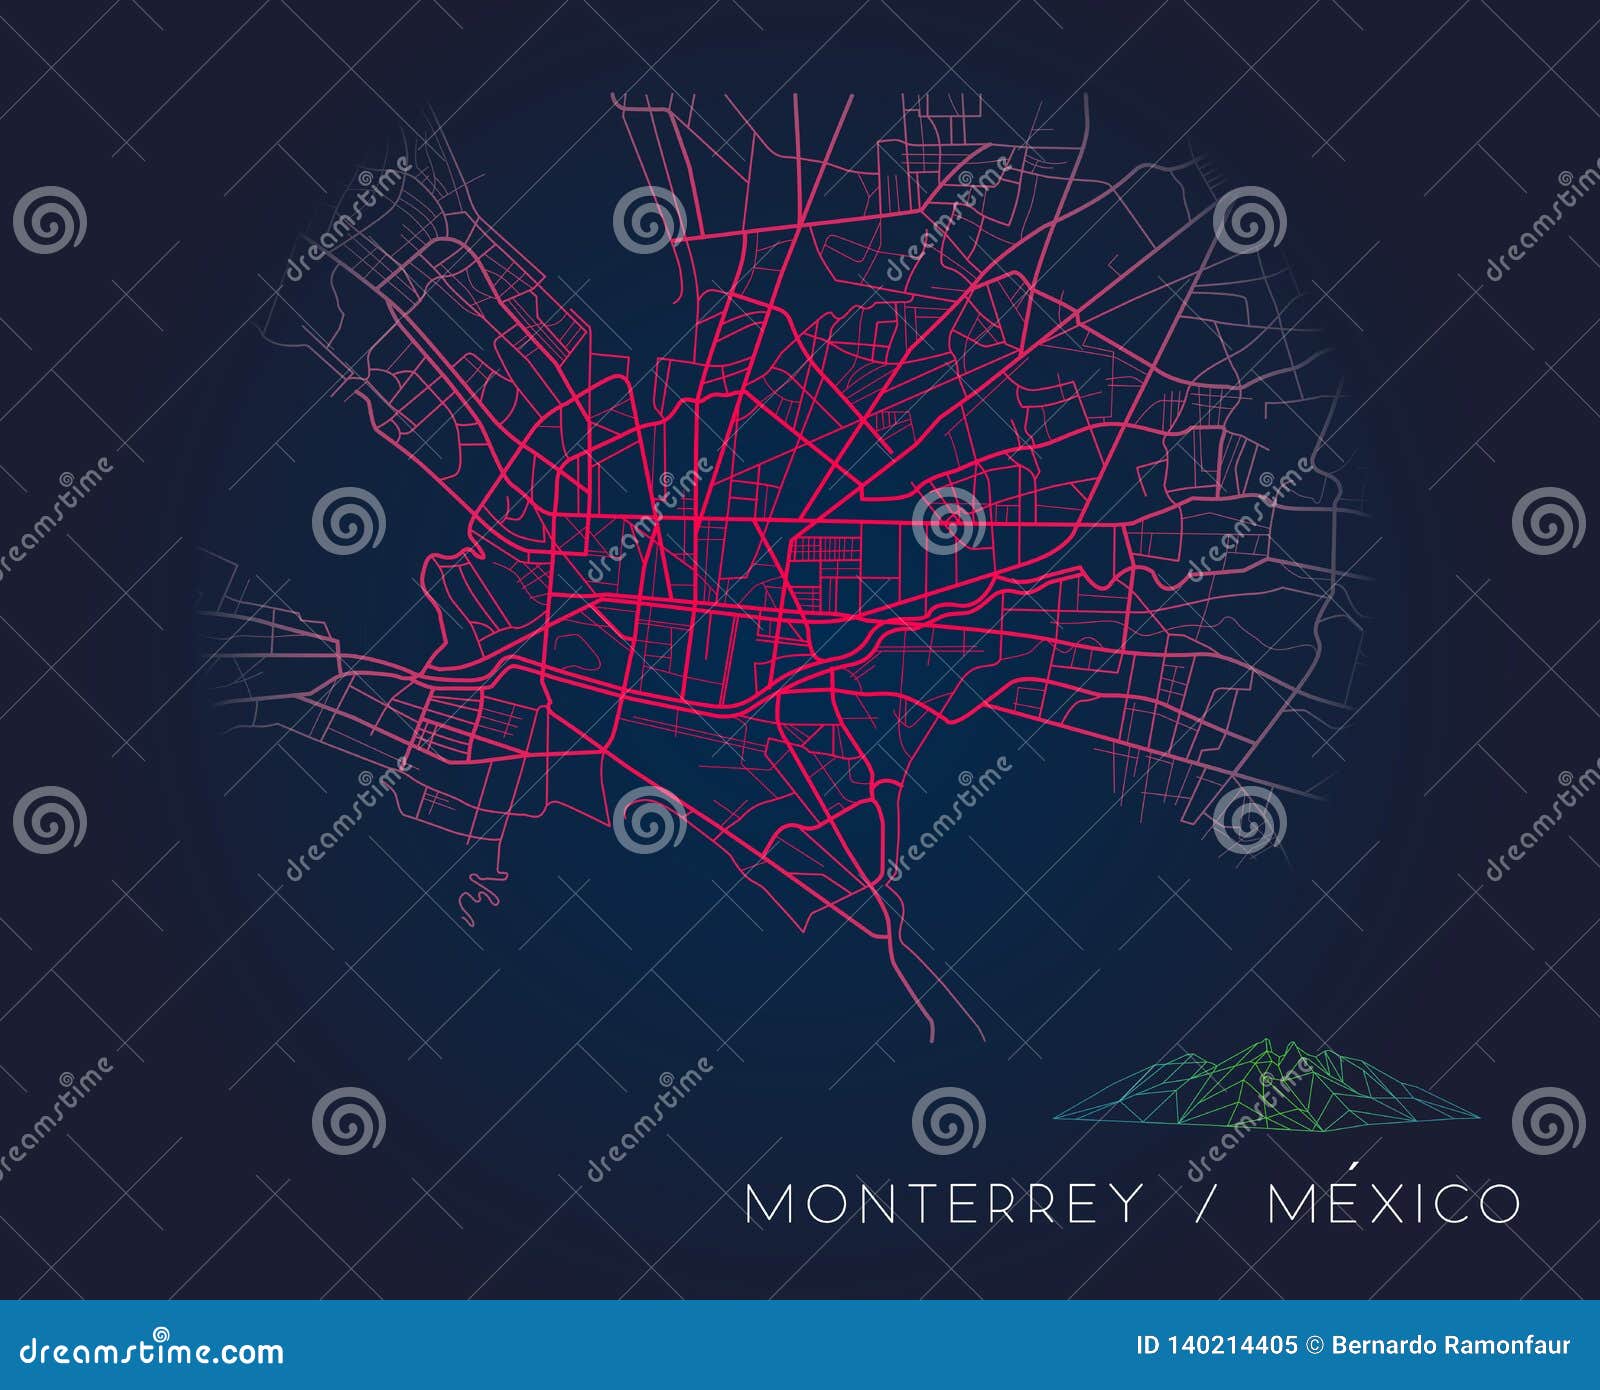 monterrey mexico city map digital 